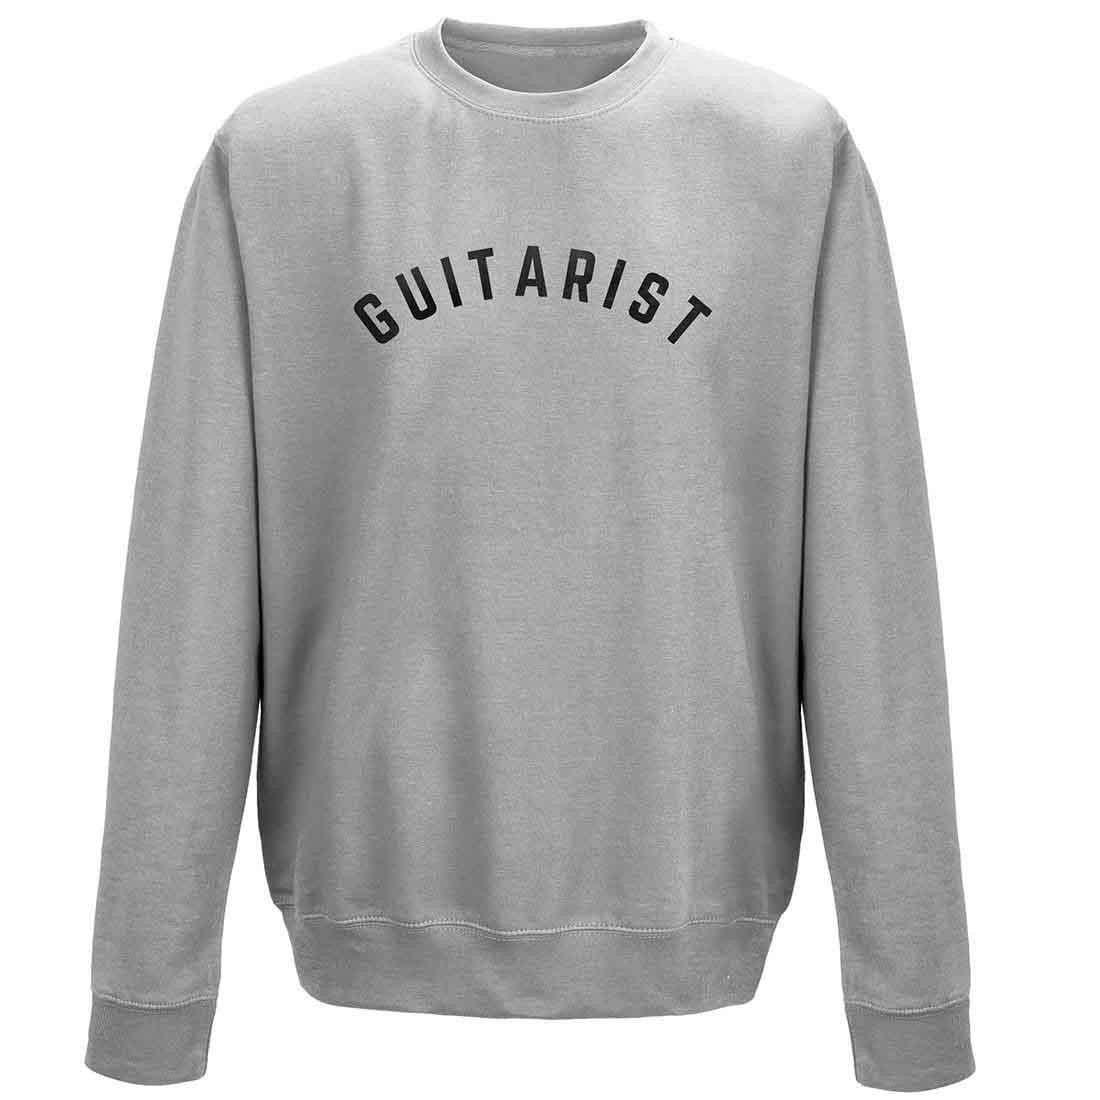 Guitarist Sweatshirt For Men and Women 8Ball